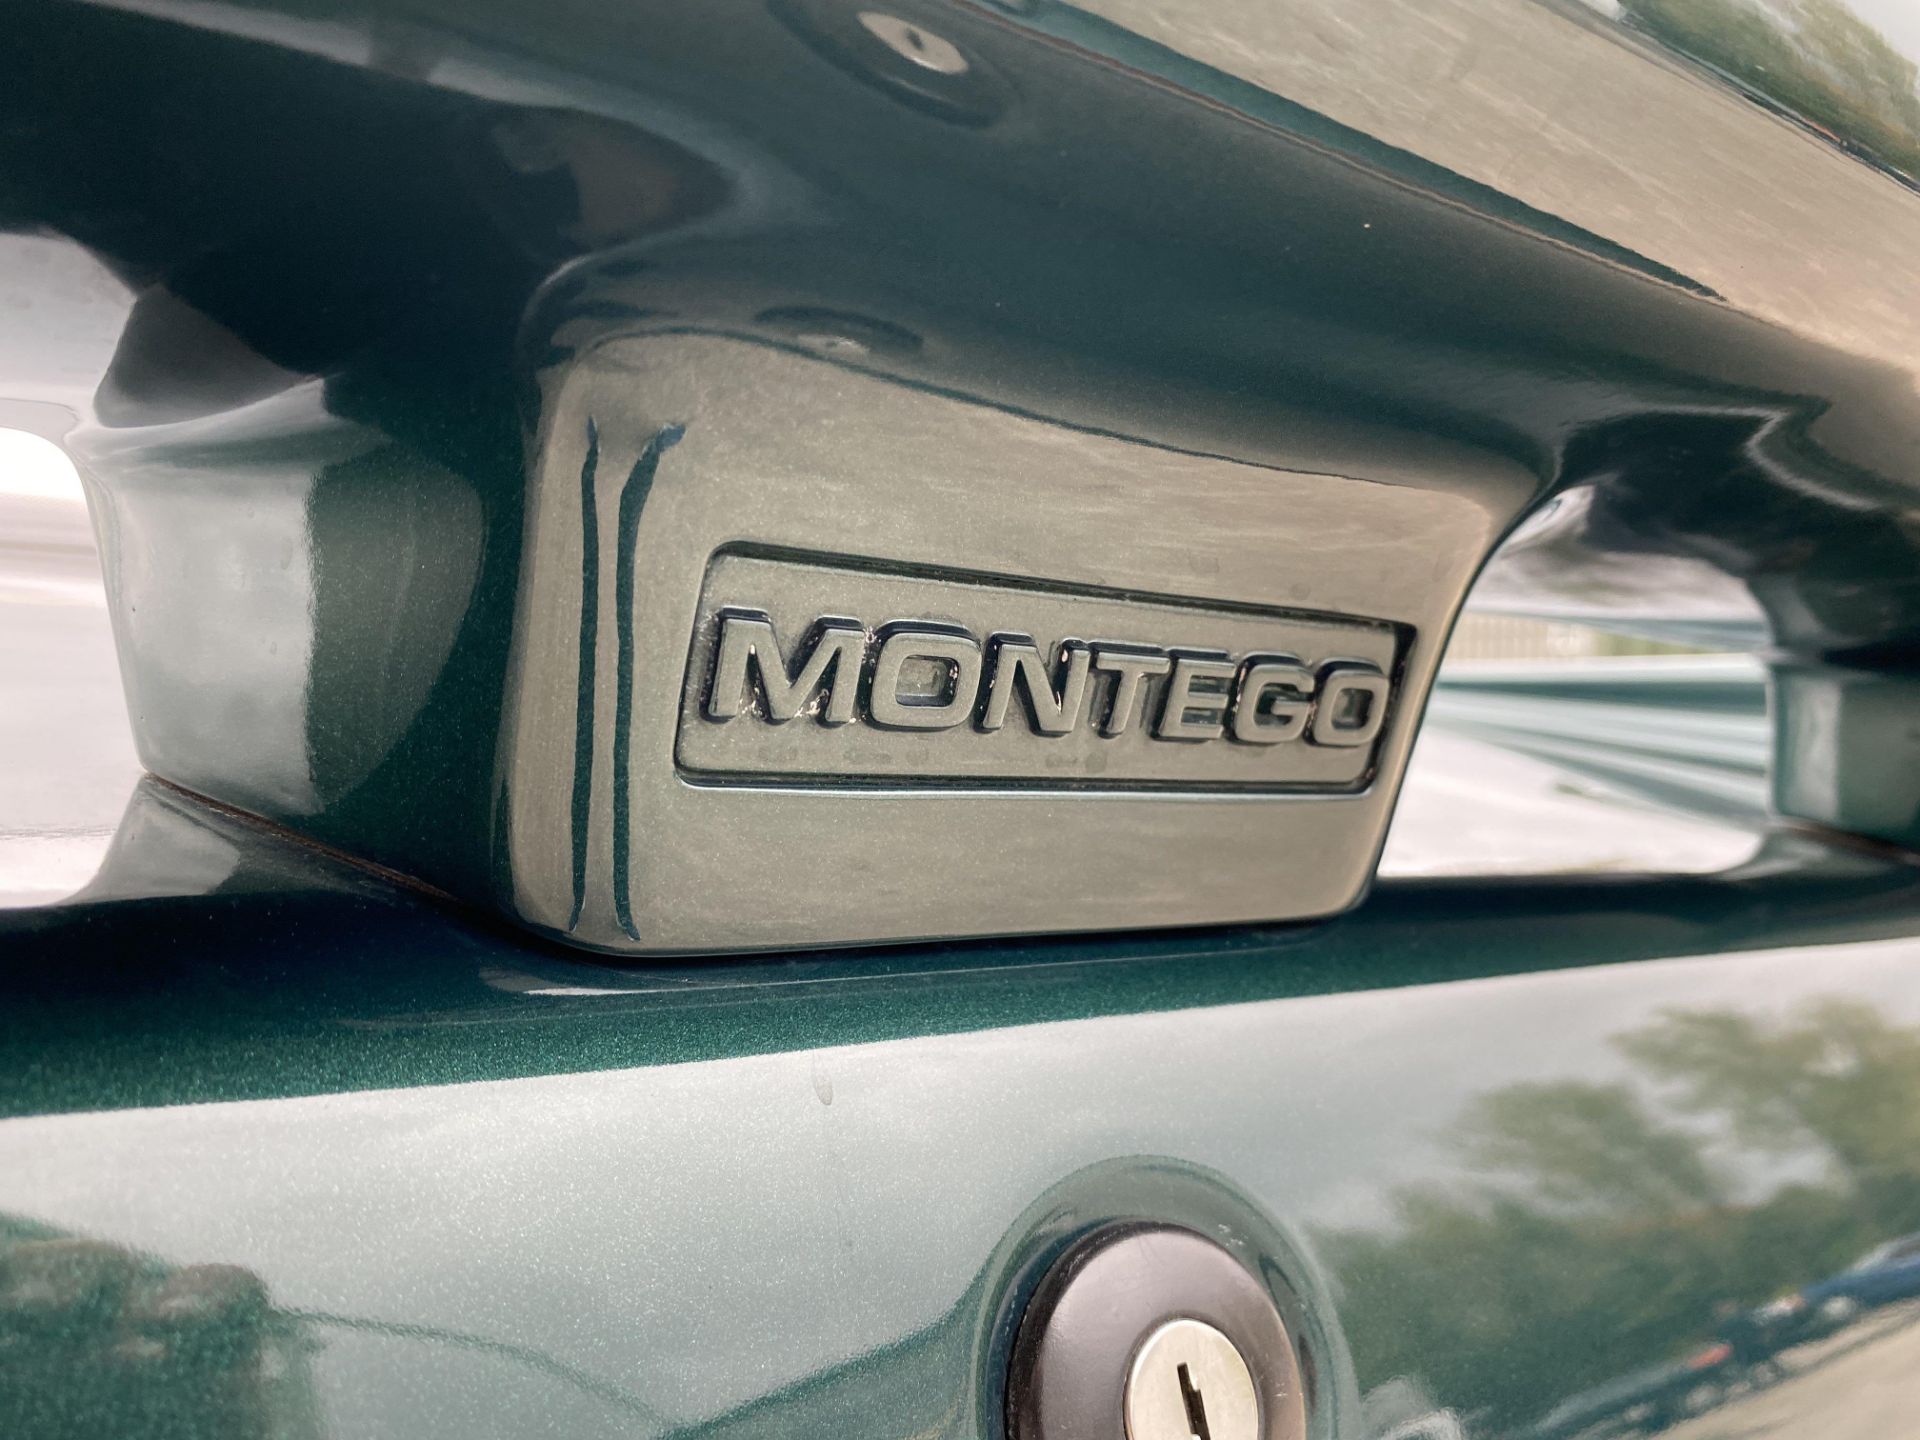 MG Montego - Image 26 of 49